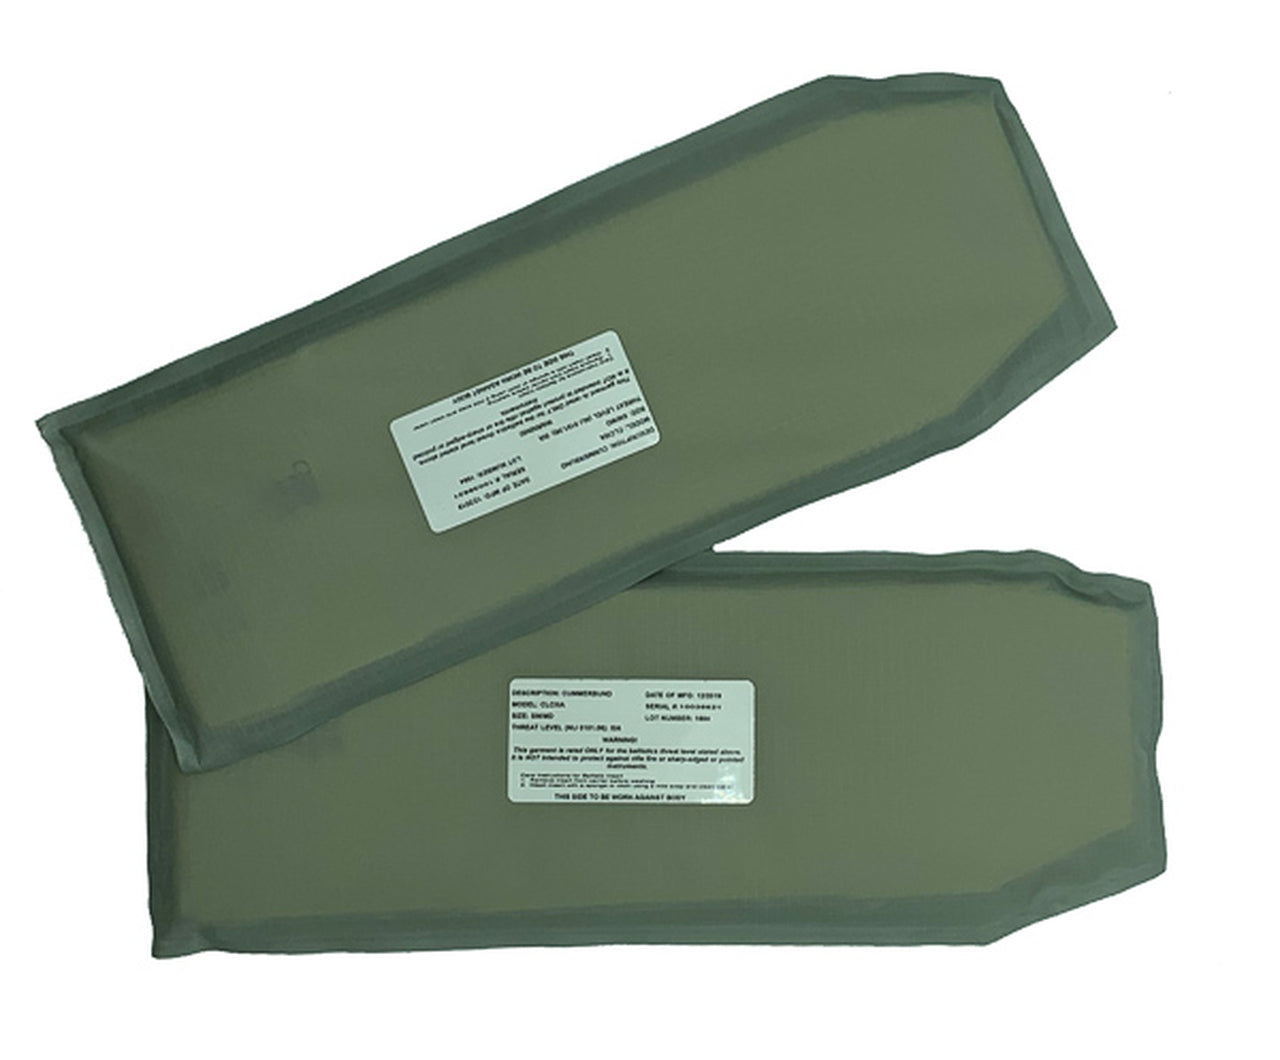 A pair of Shellback Tactical Banshee 3.0 Level IIIA Model CLCIIIA Soft Armor Cummerbund Insert - Set of 2 gray plastic bags on a white background.